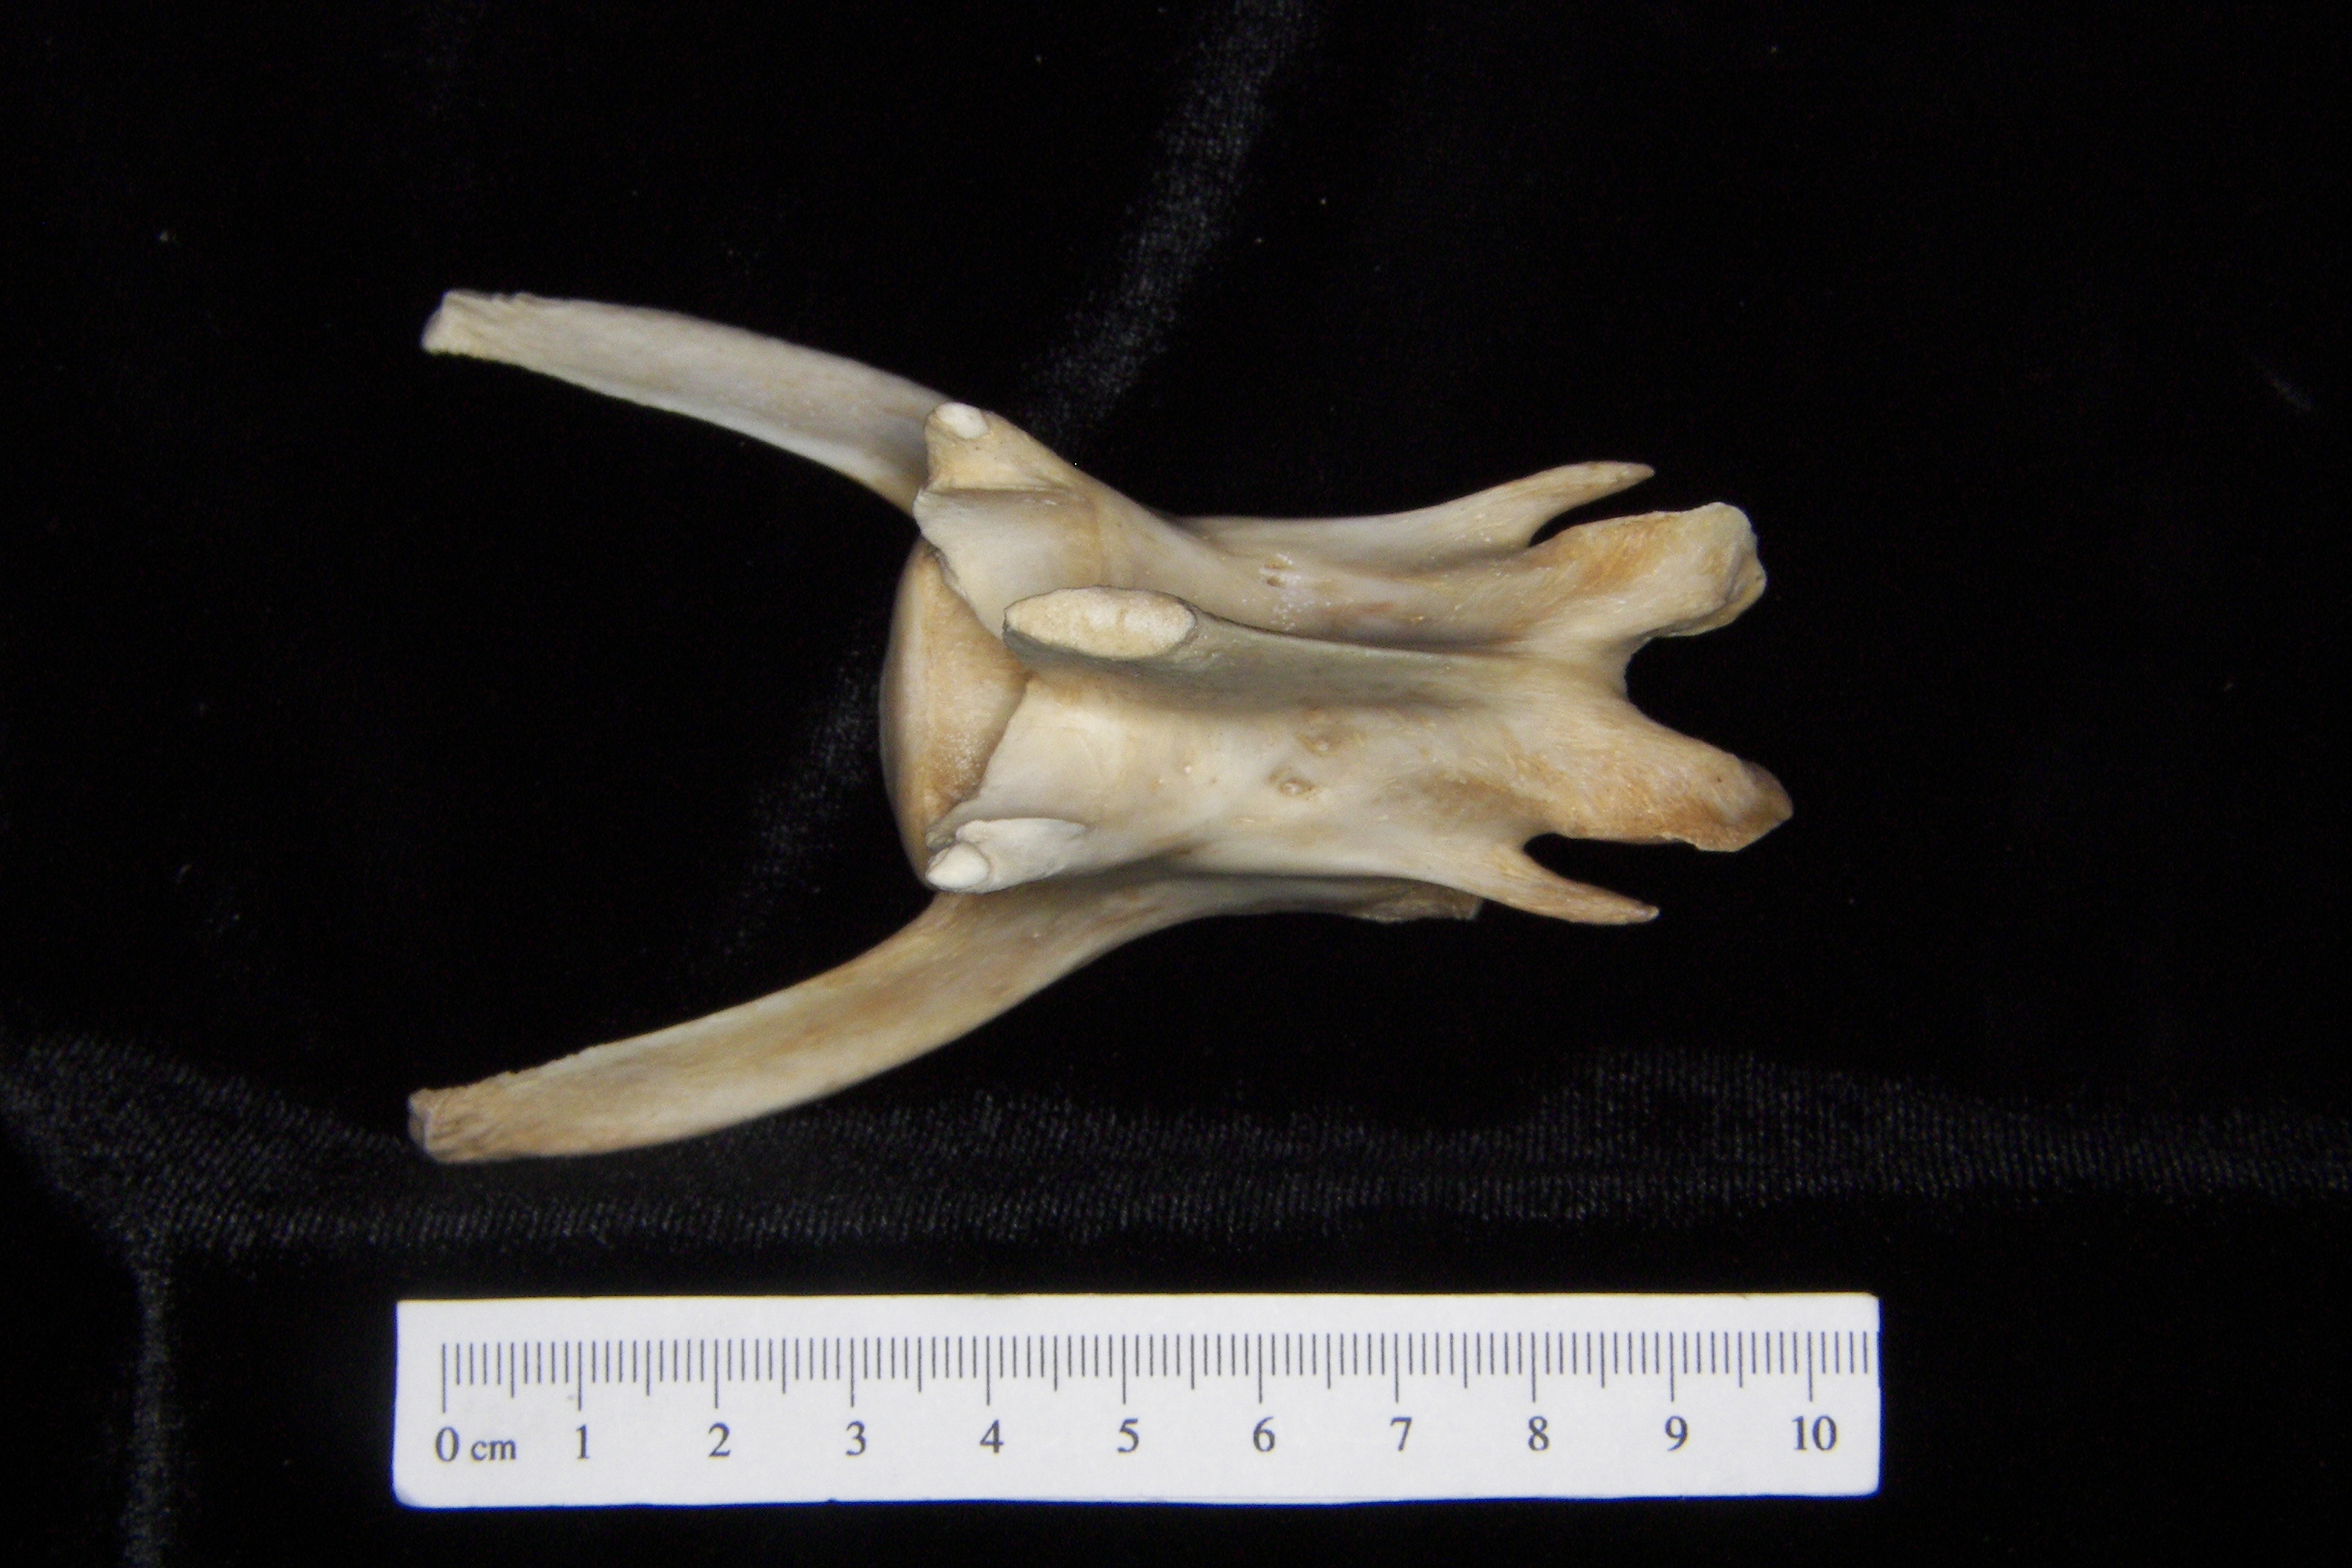 Florida panther (Puma concolor) 3rd lumbar vertebra - BoneID